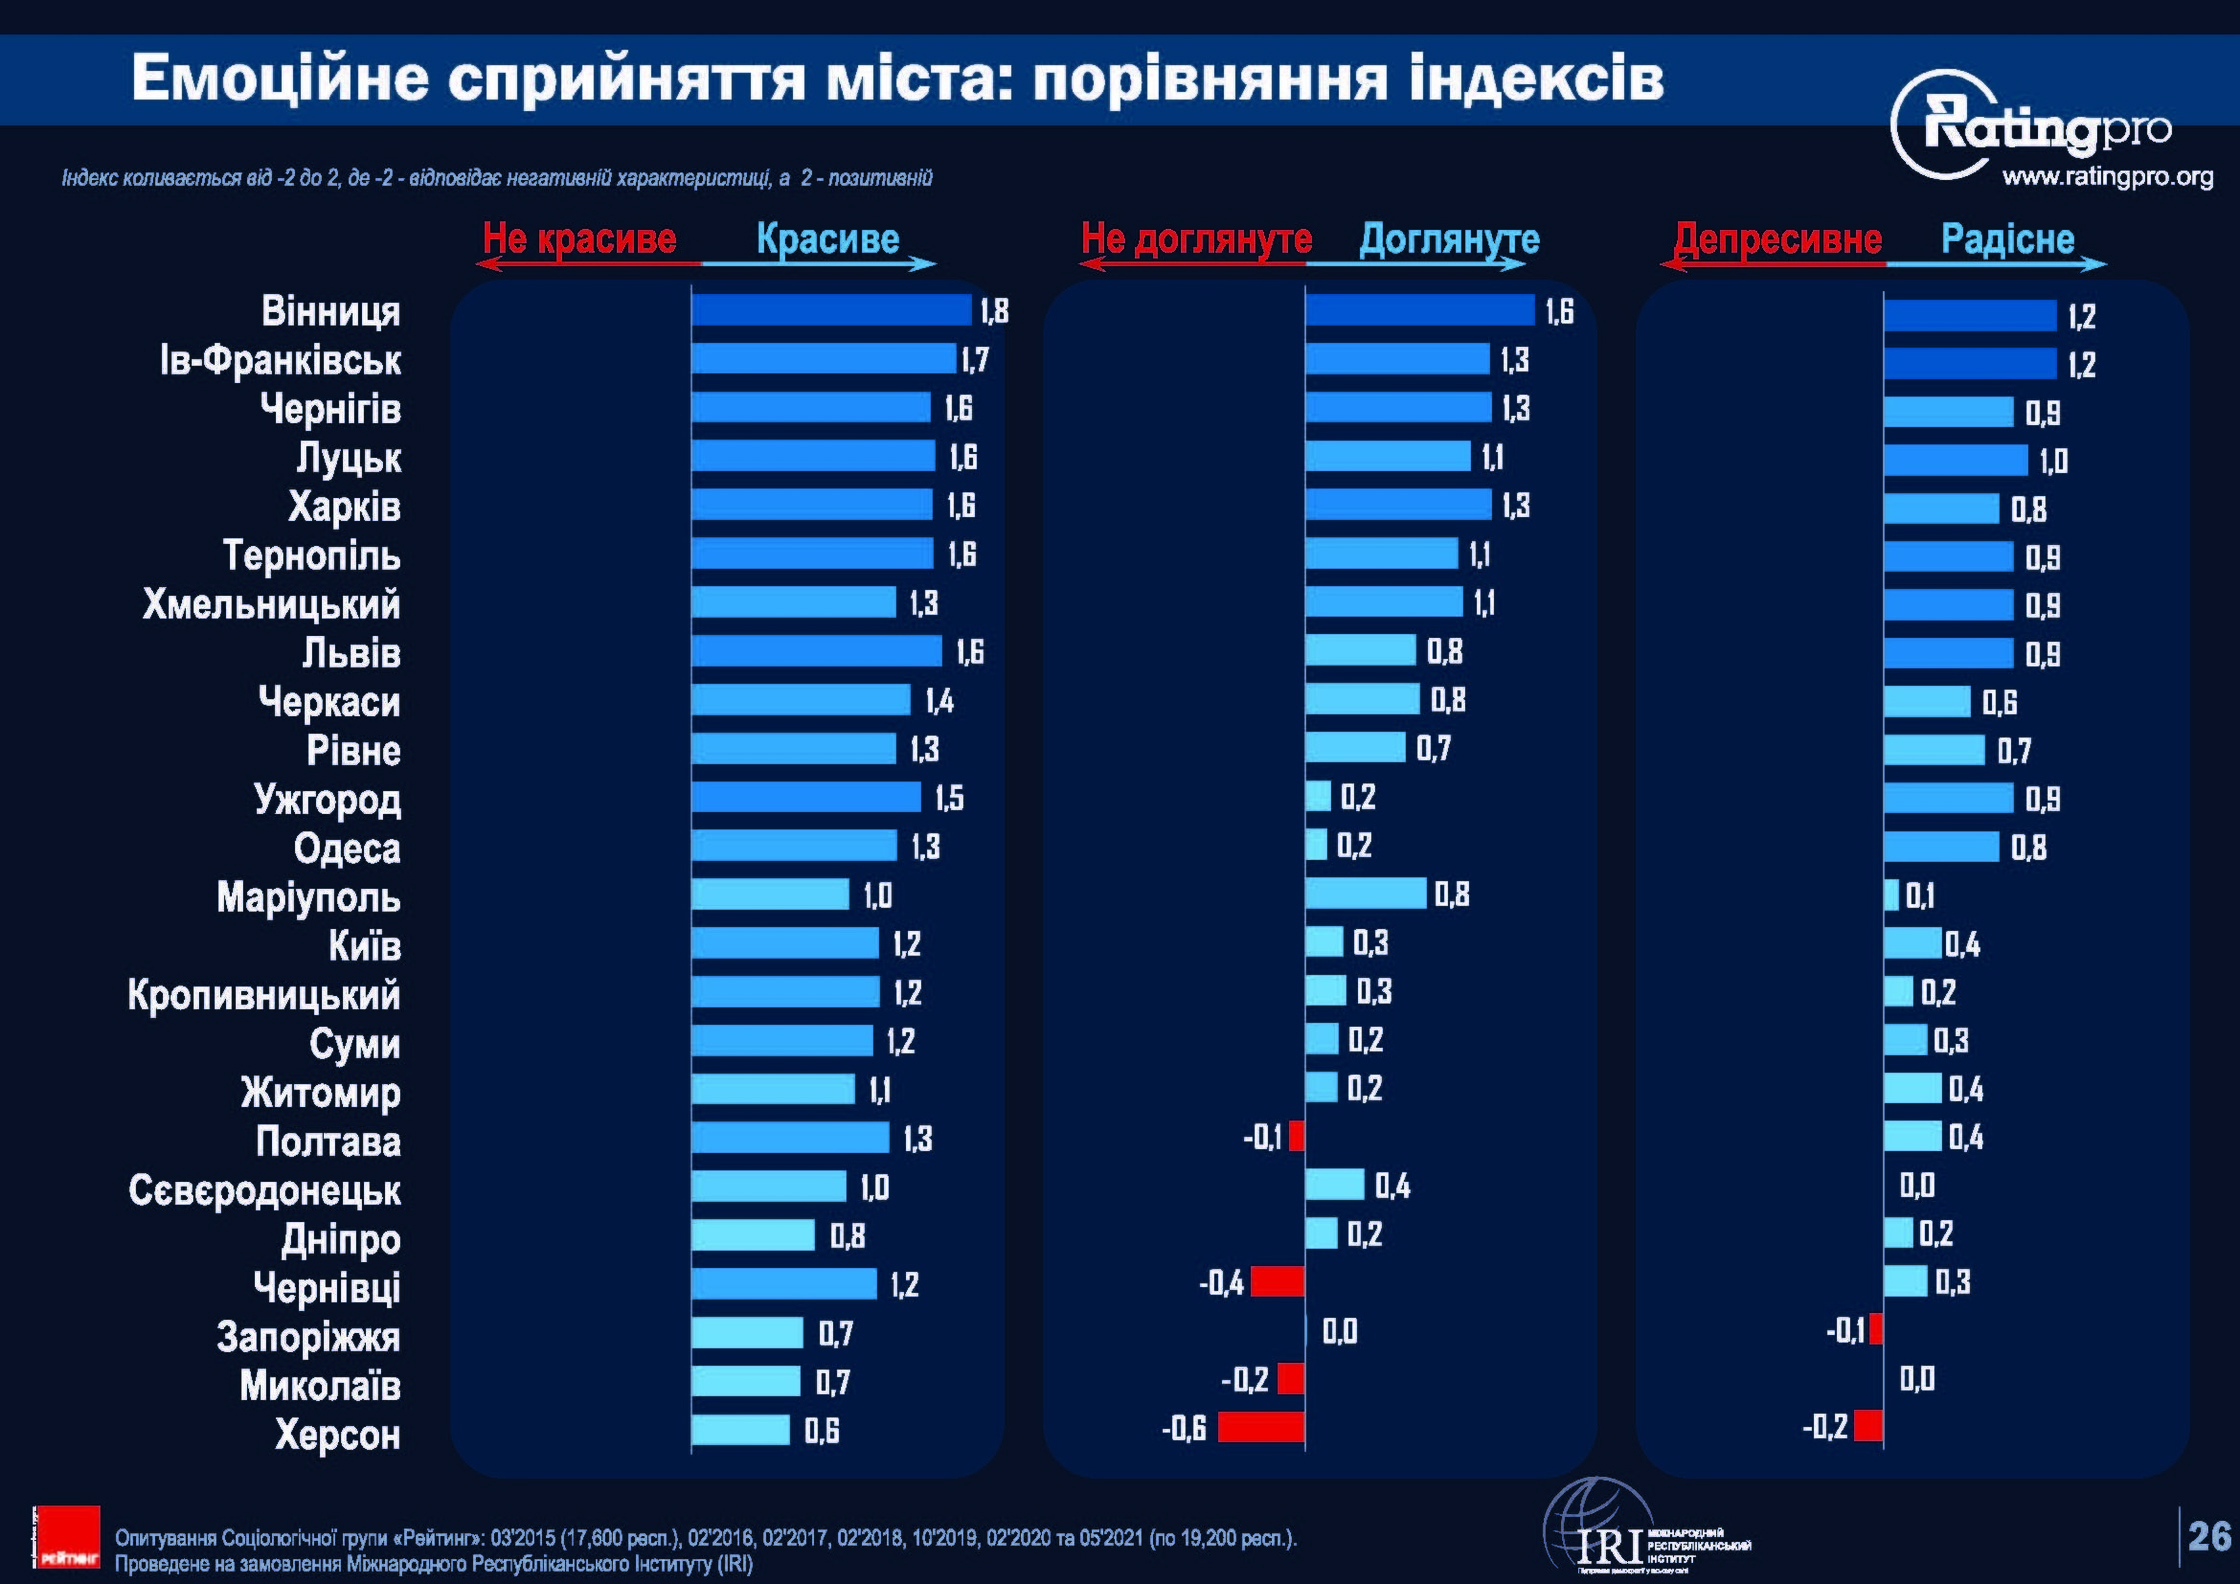 Rating of Ukrainian cities 2021-Сторінка-26